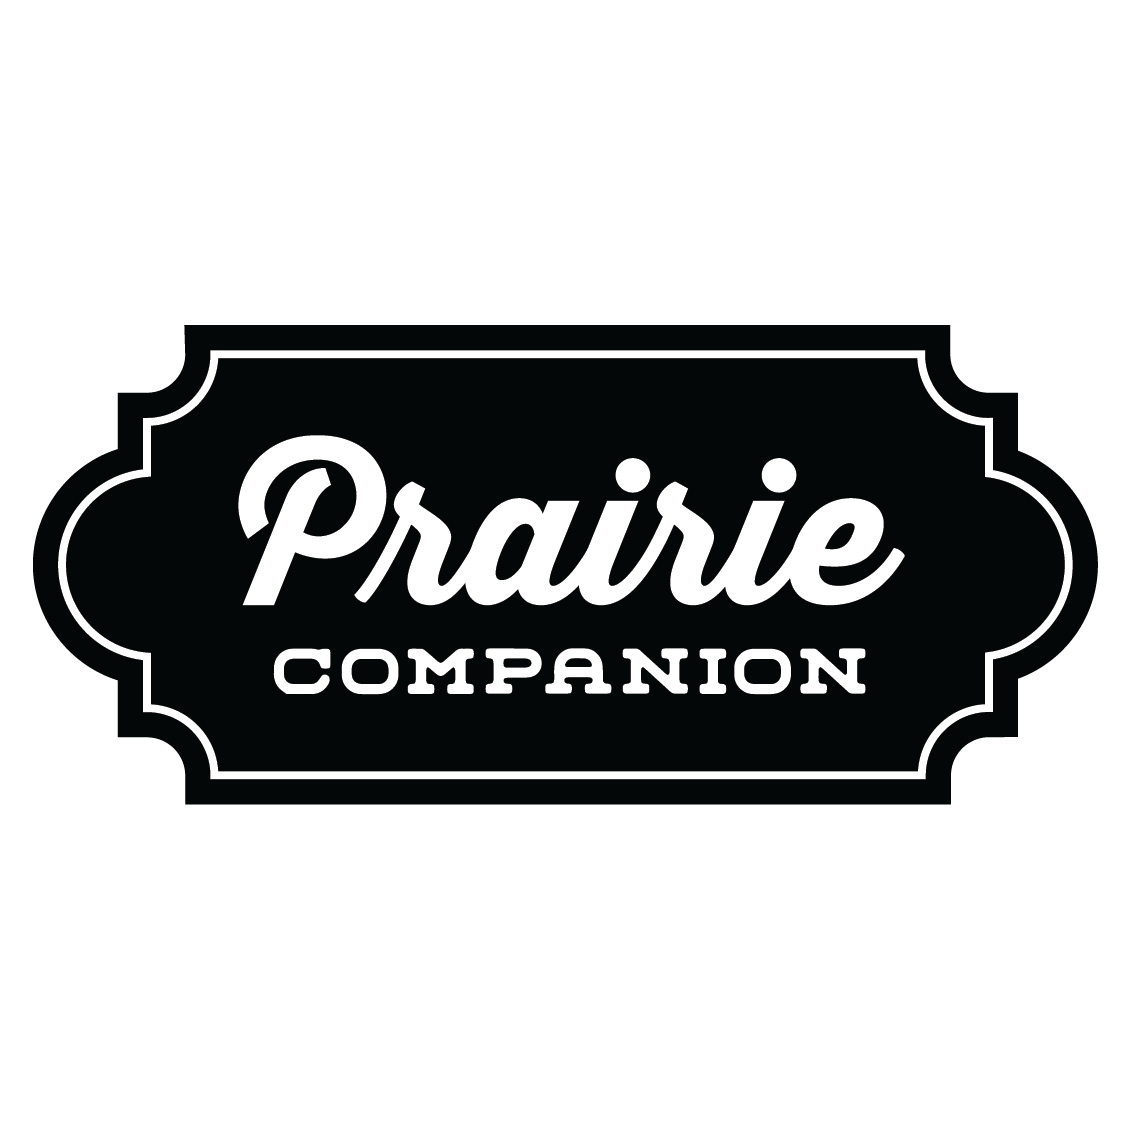 Prairie Companion Company